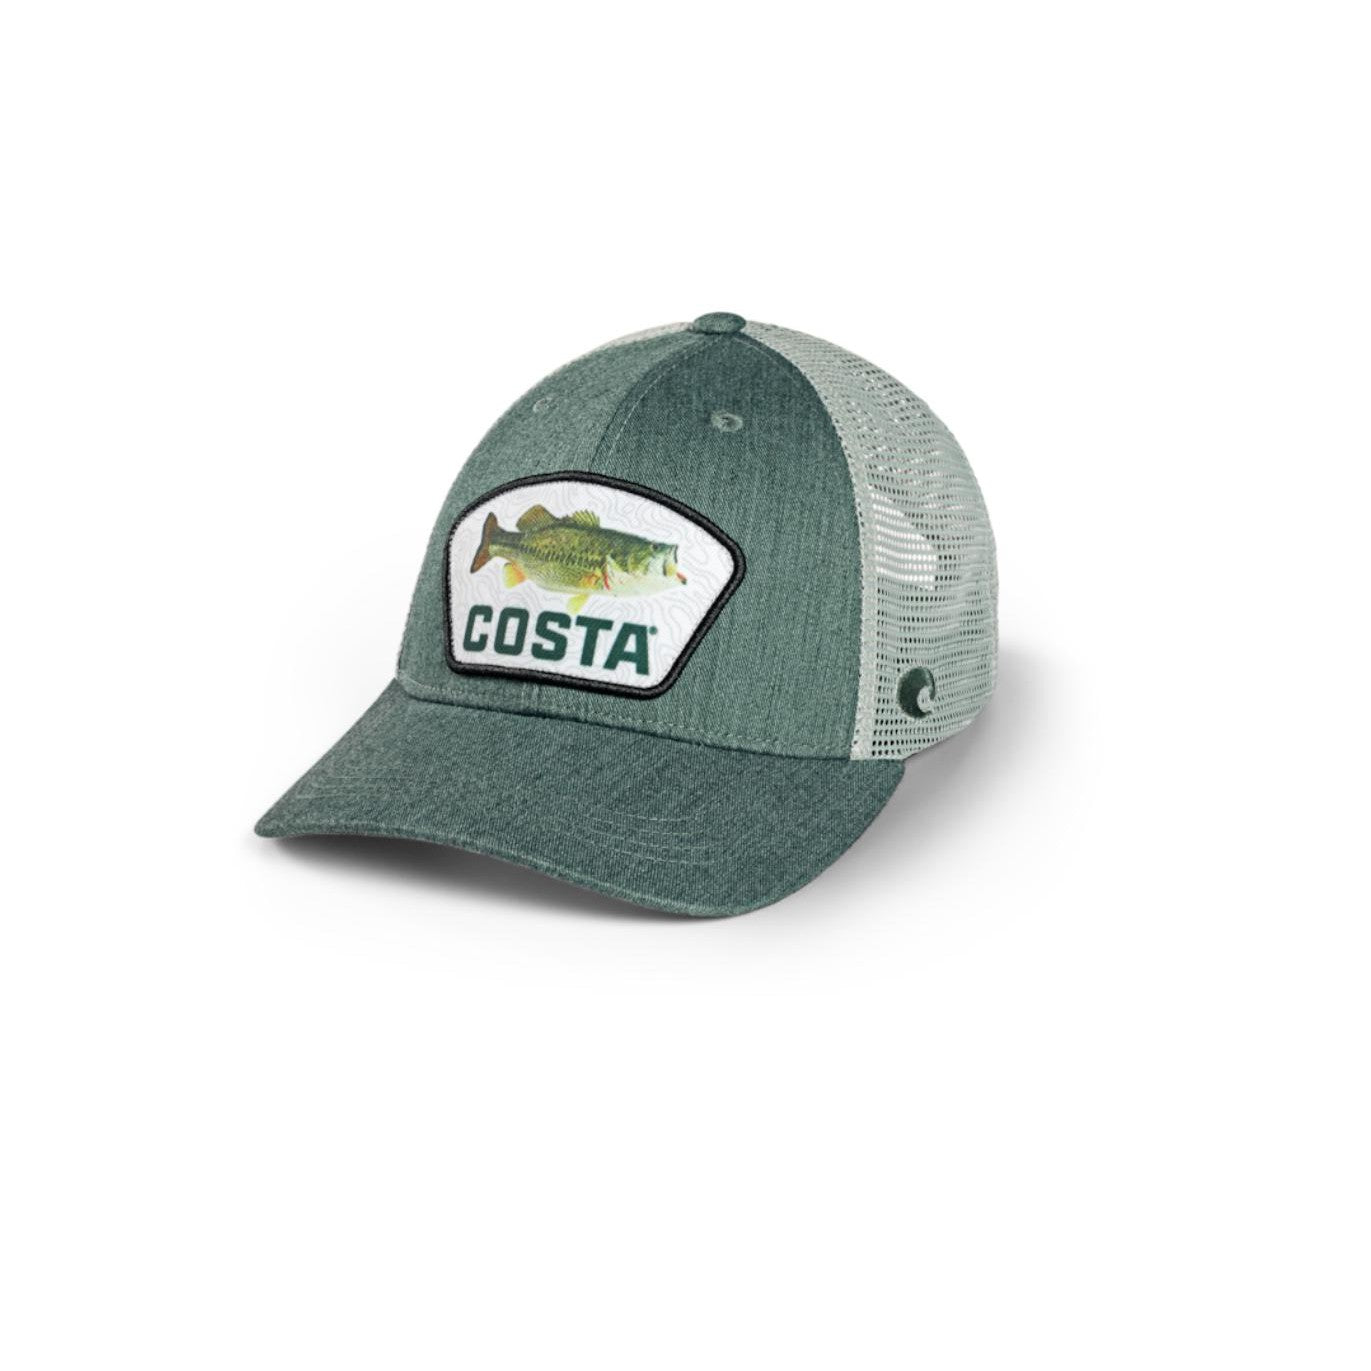 Costa Trucker Hats